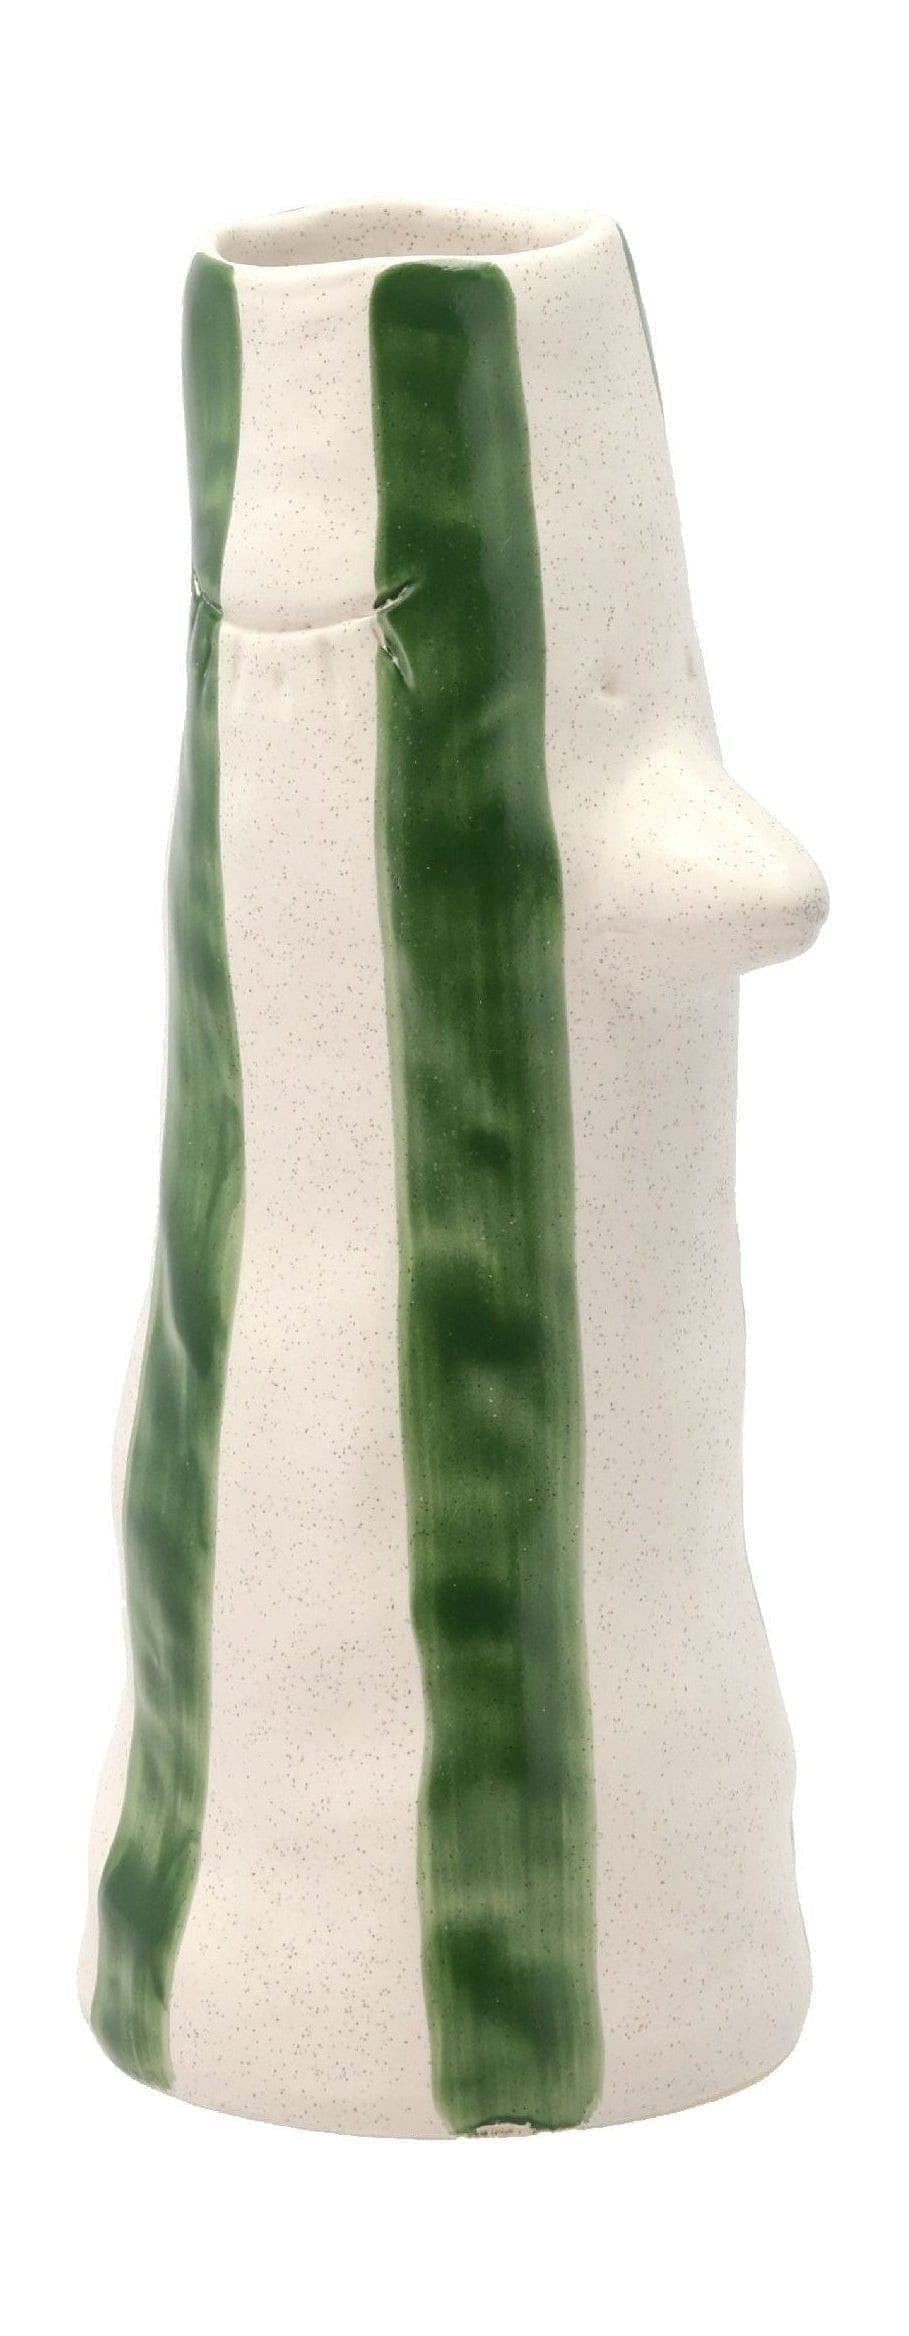 Villa Collection Styles Vase med nebb og øyevipper små, grønne